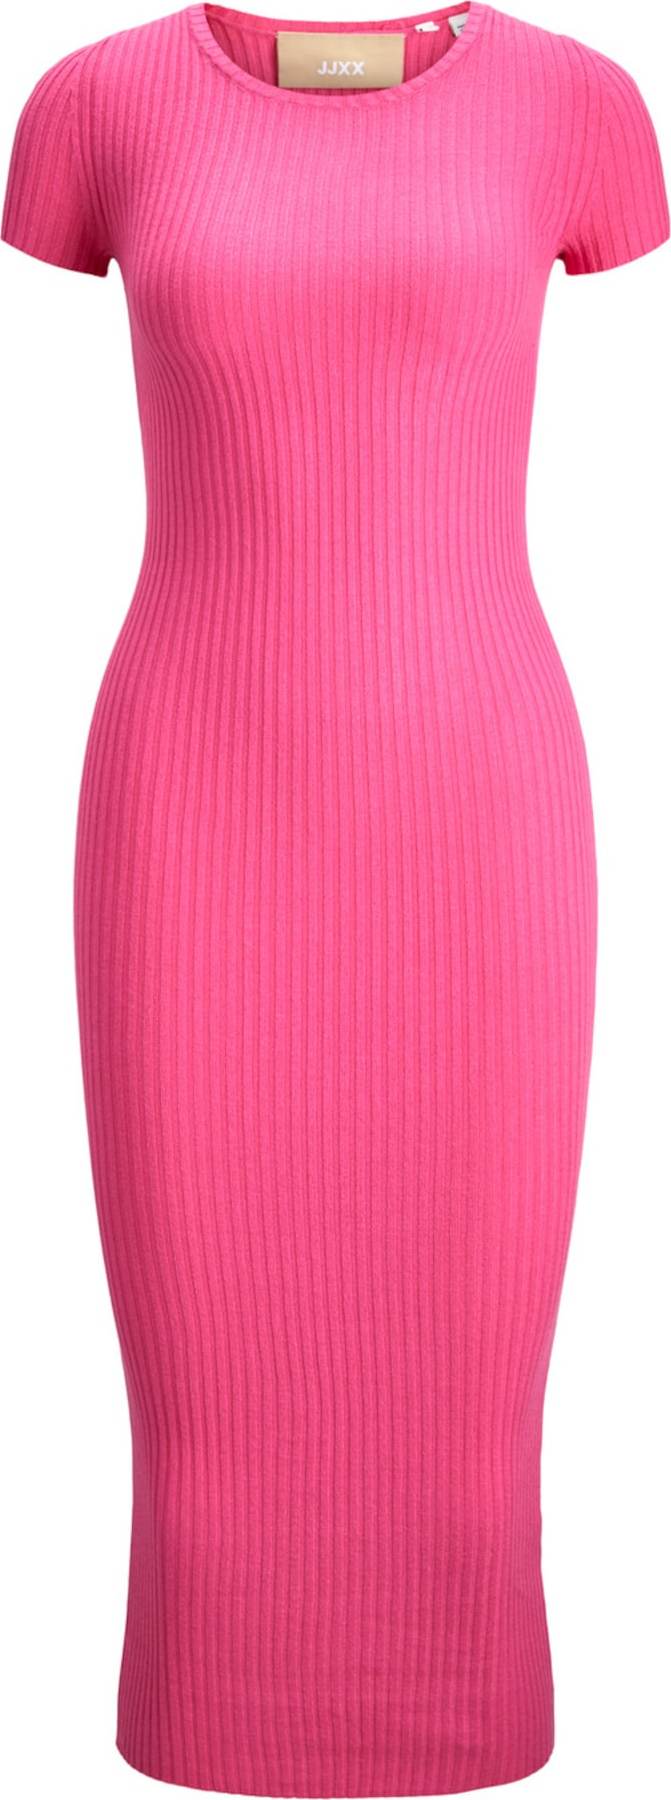 JJXX Úpletové šaty 'Kikki' pink